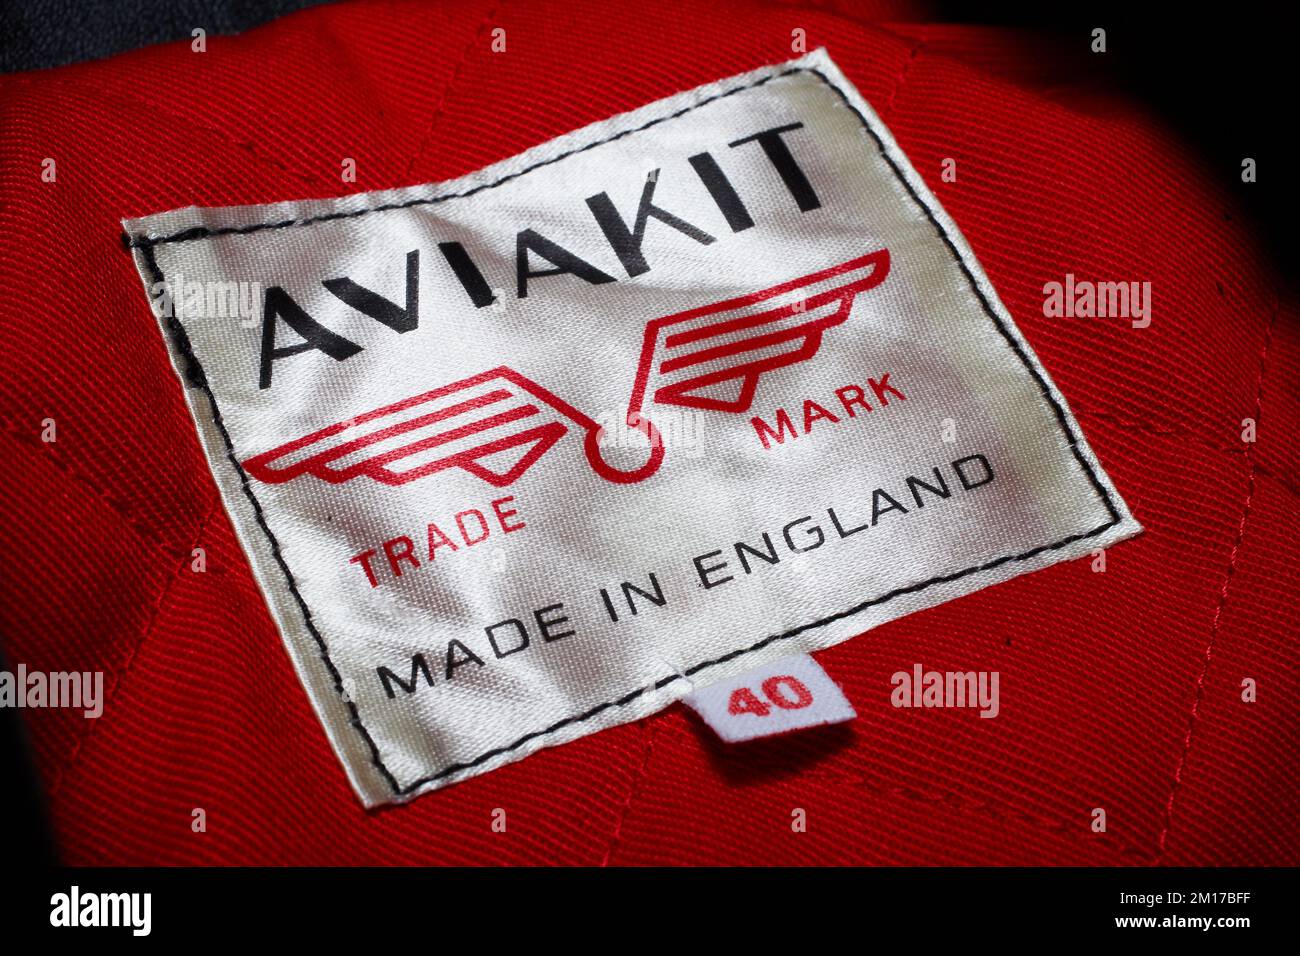 Etiqueta Aviakit en una chaqueta de leathers Lewis. Foto de stock